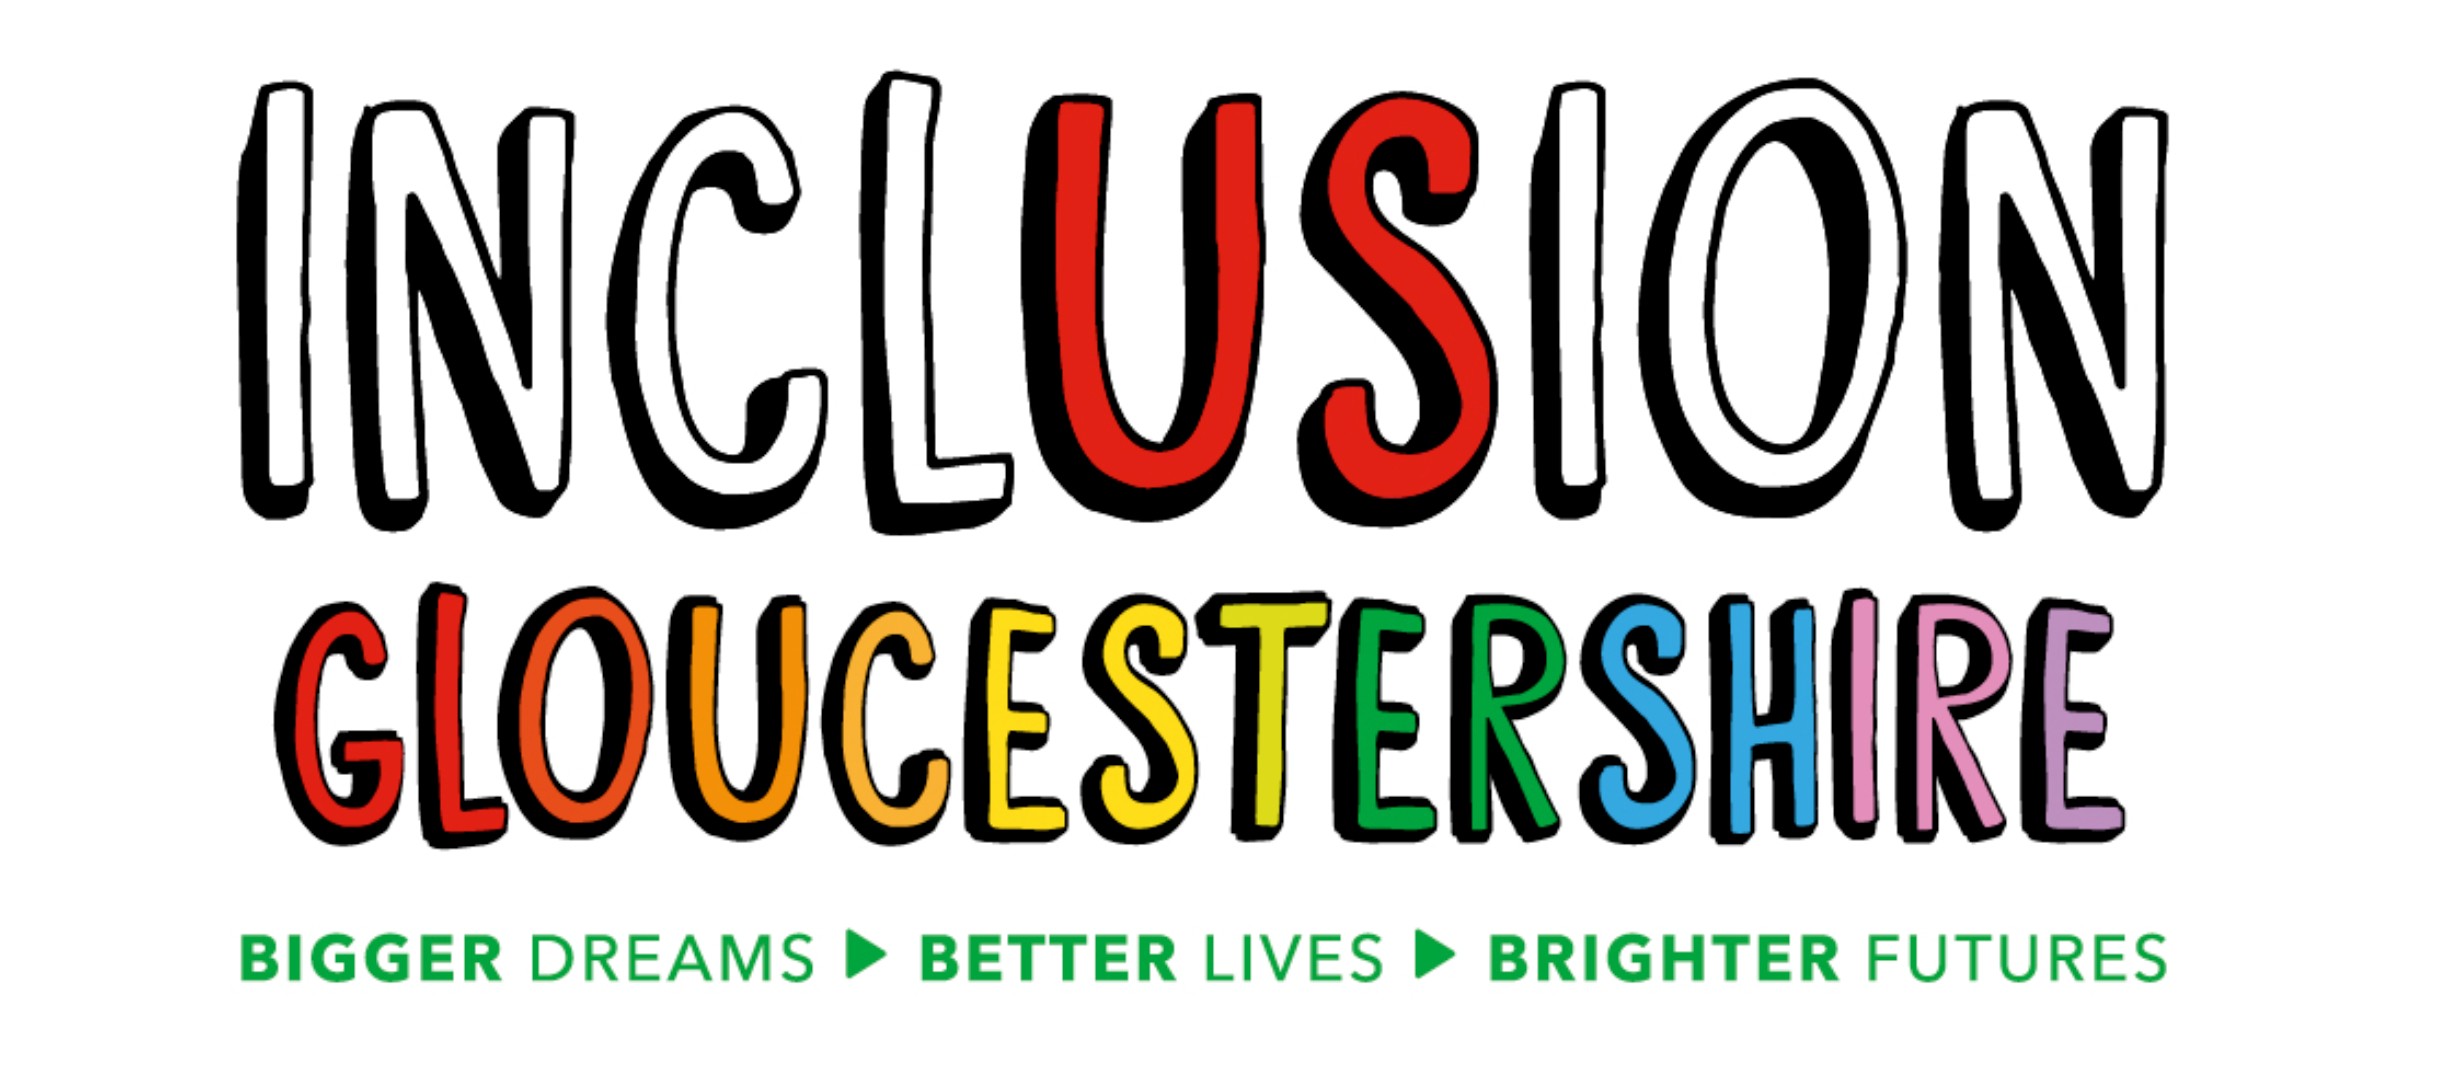 Inclusion Gloucestershire Logo